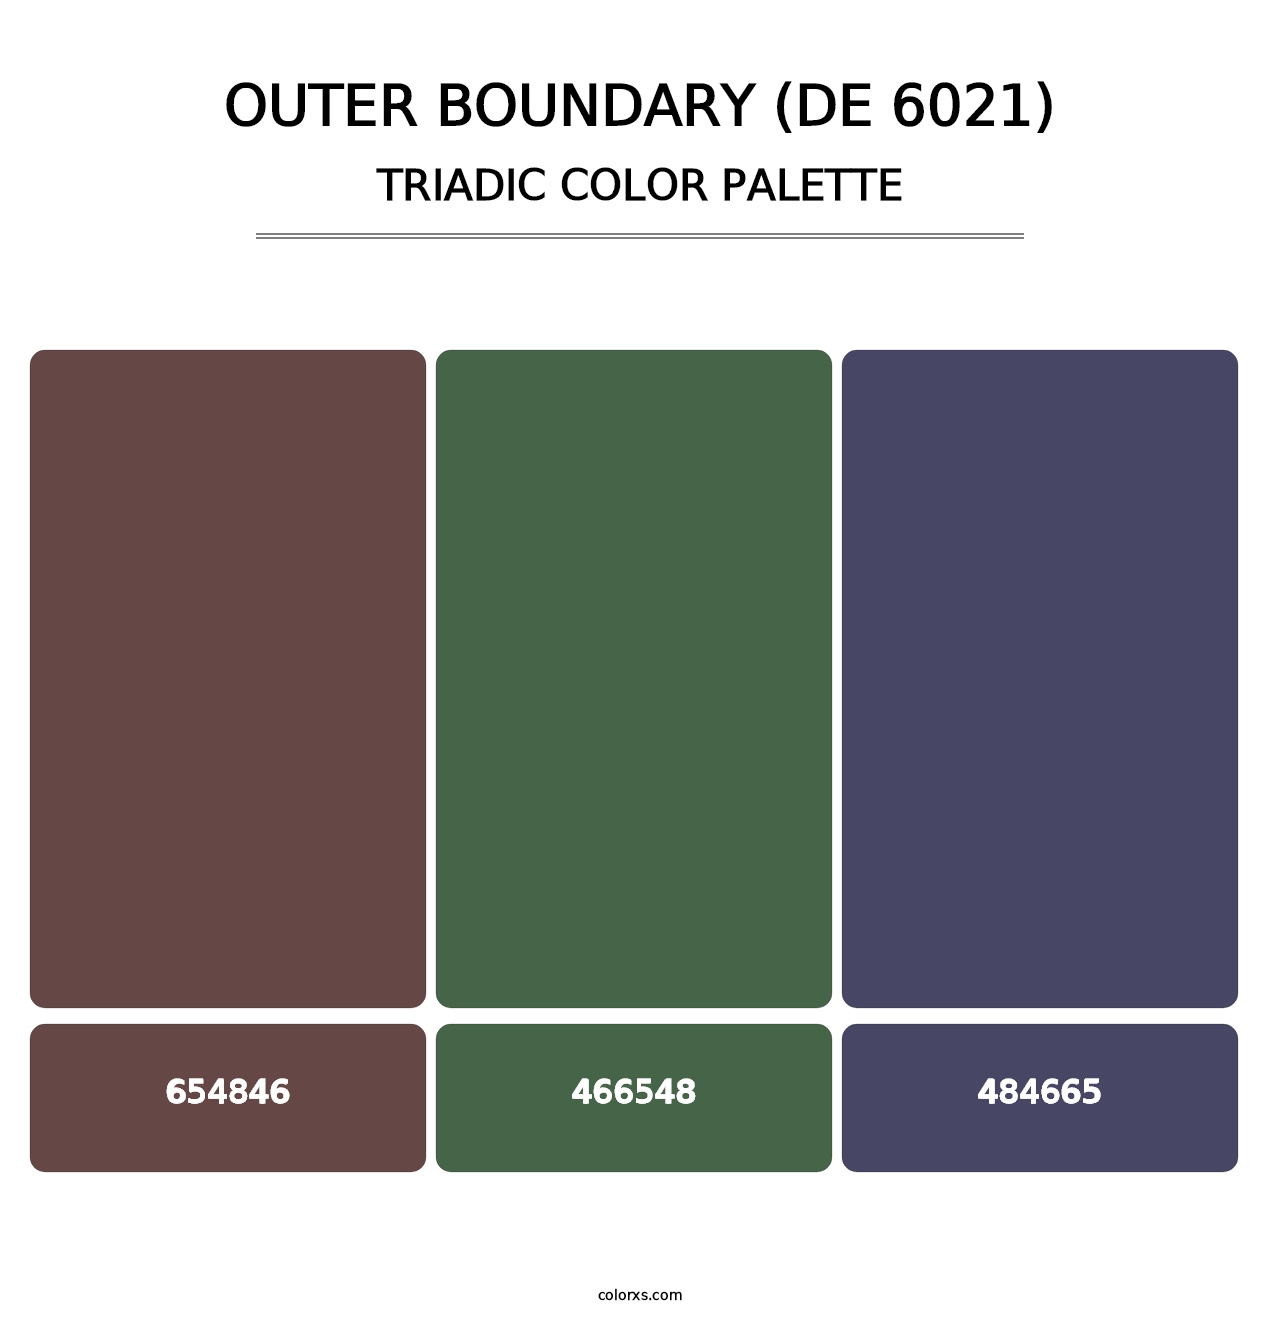 Outer Boundary (DE 6021) - Triadic Color Palette